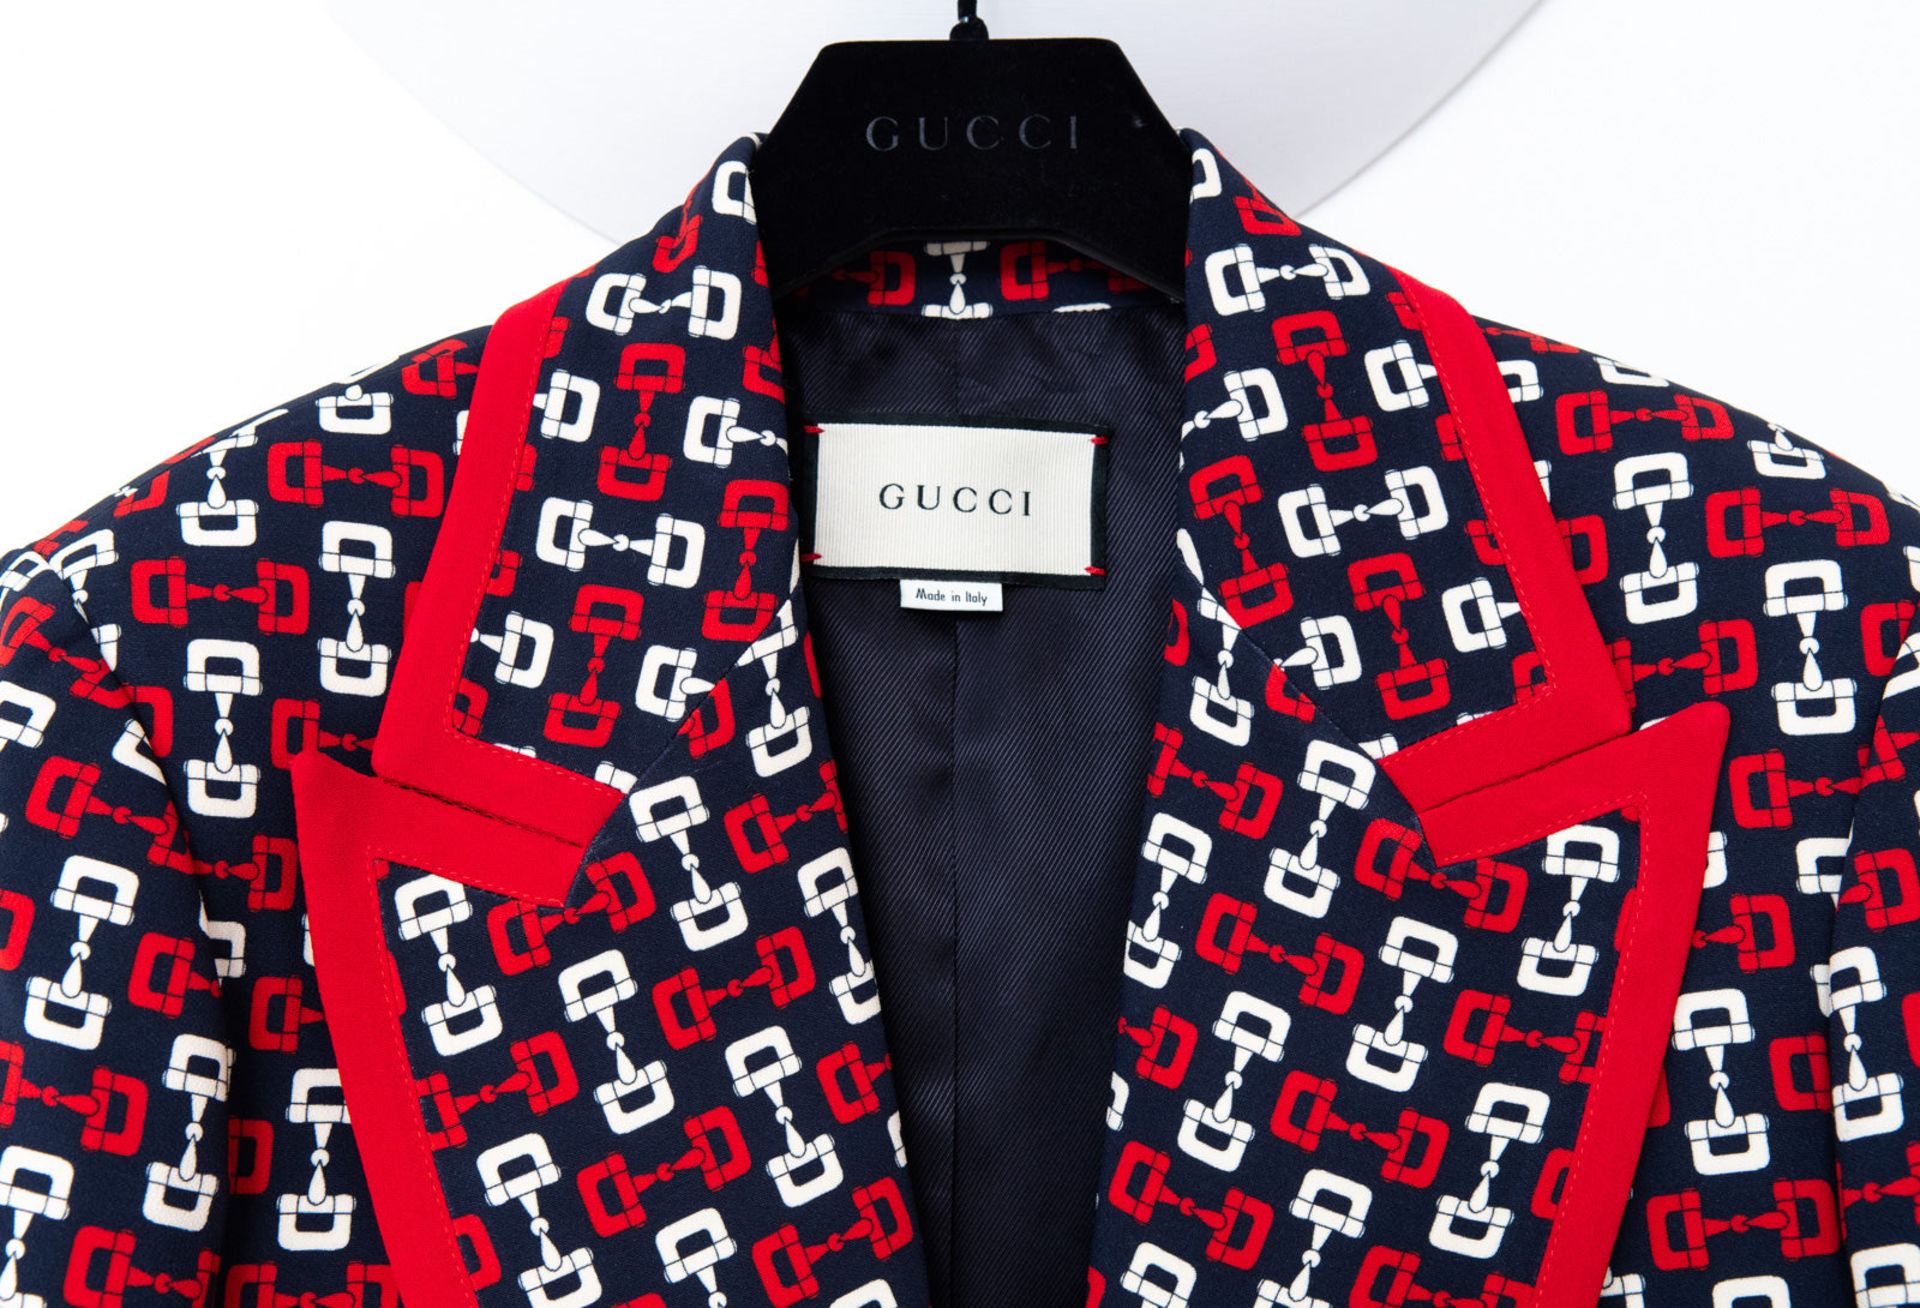 Gucci Red Horsebit Print Jacket - Image 4 of 9